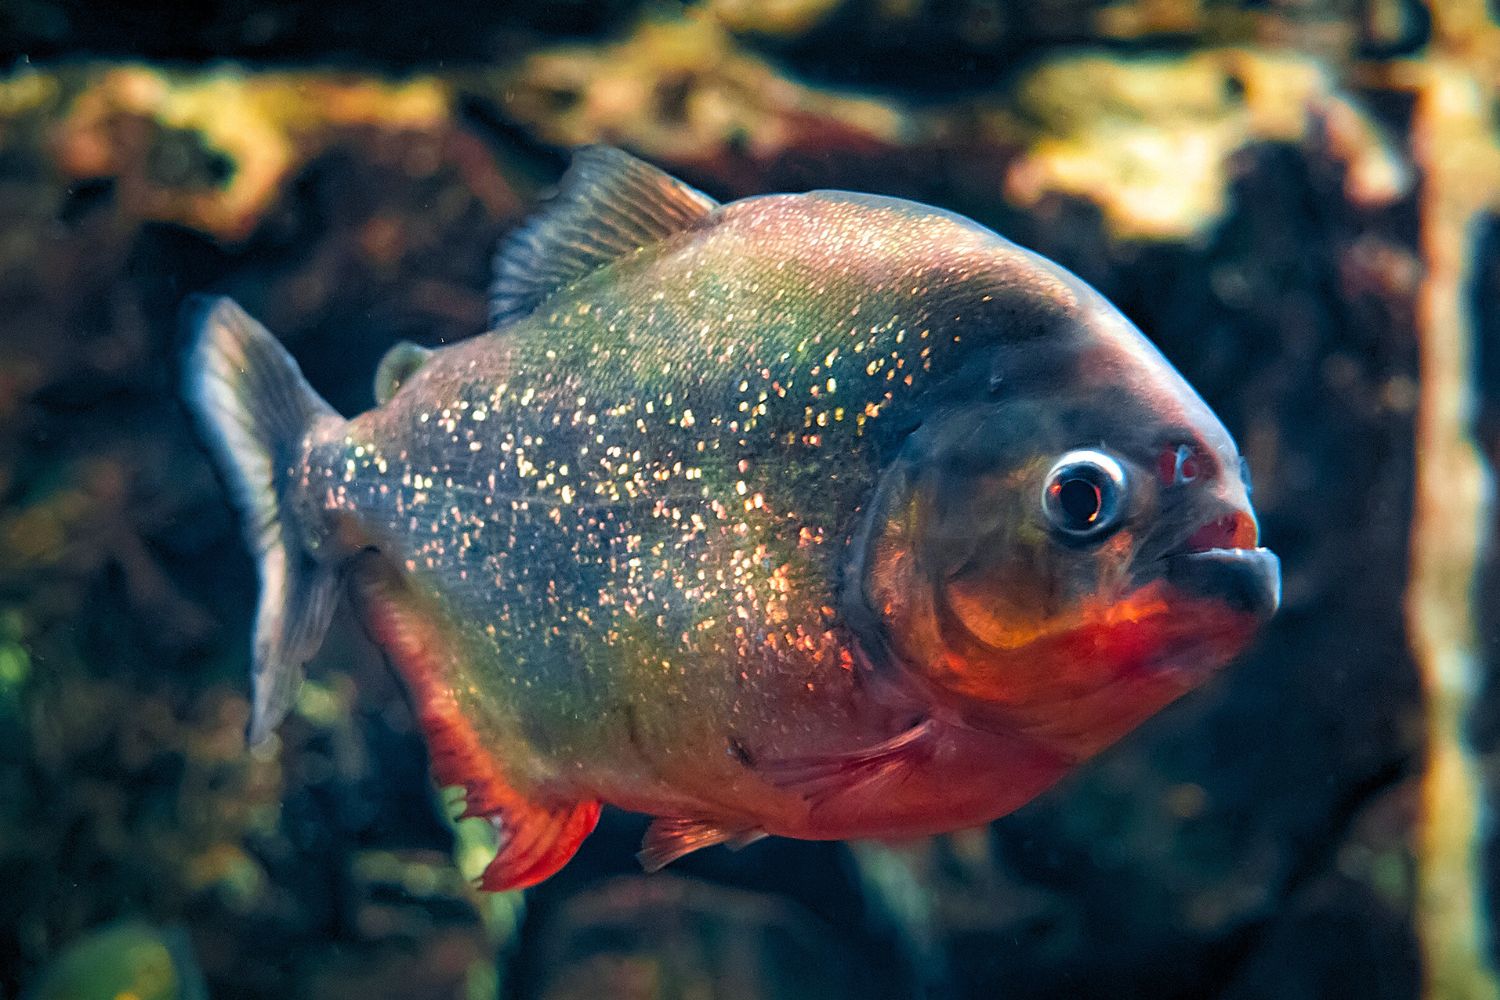 4. Red-bellied Piranha (Pygocentrus nattereri)